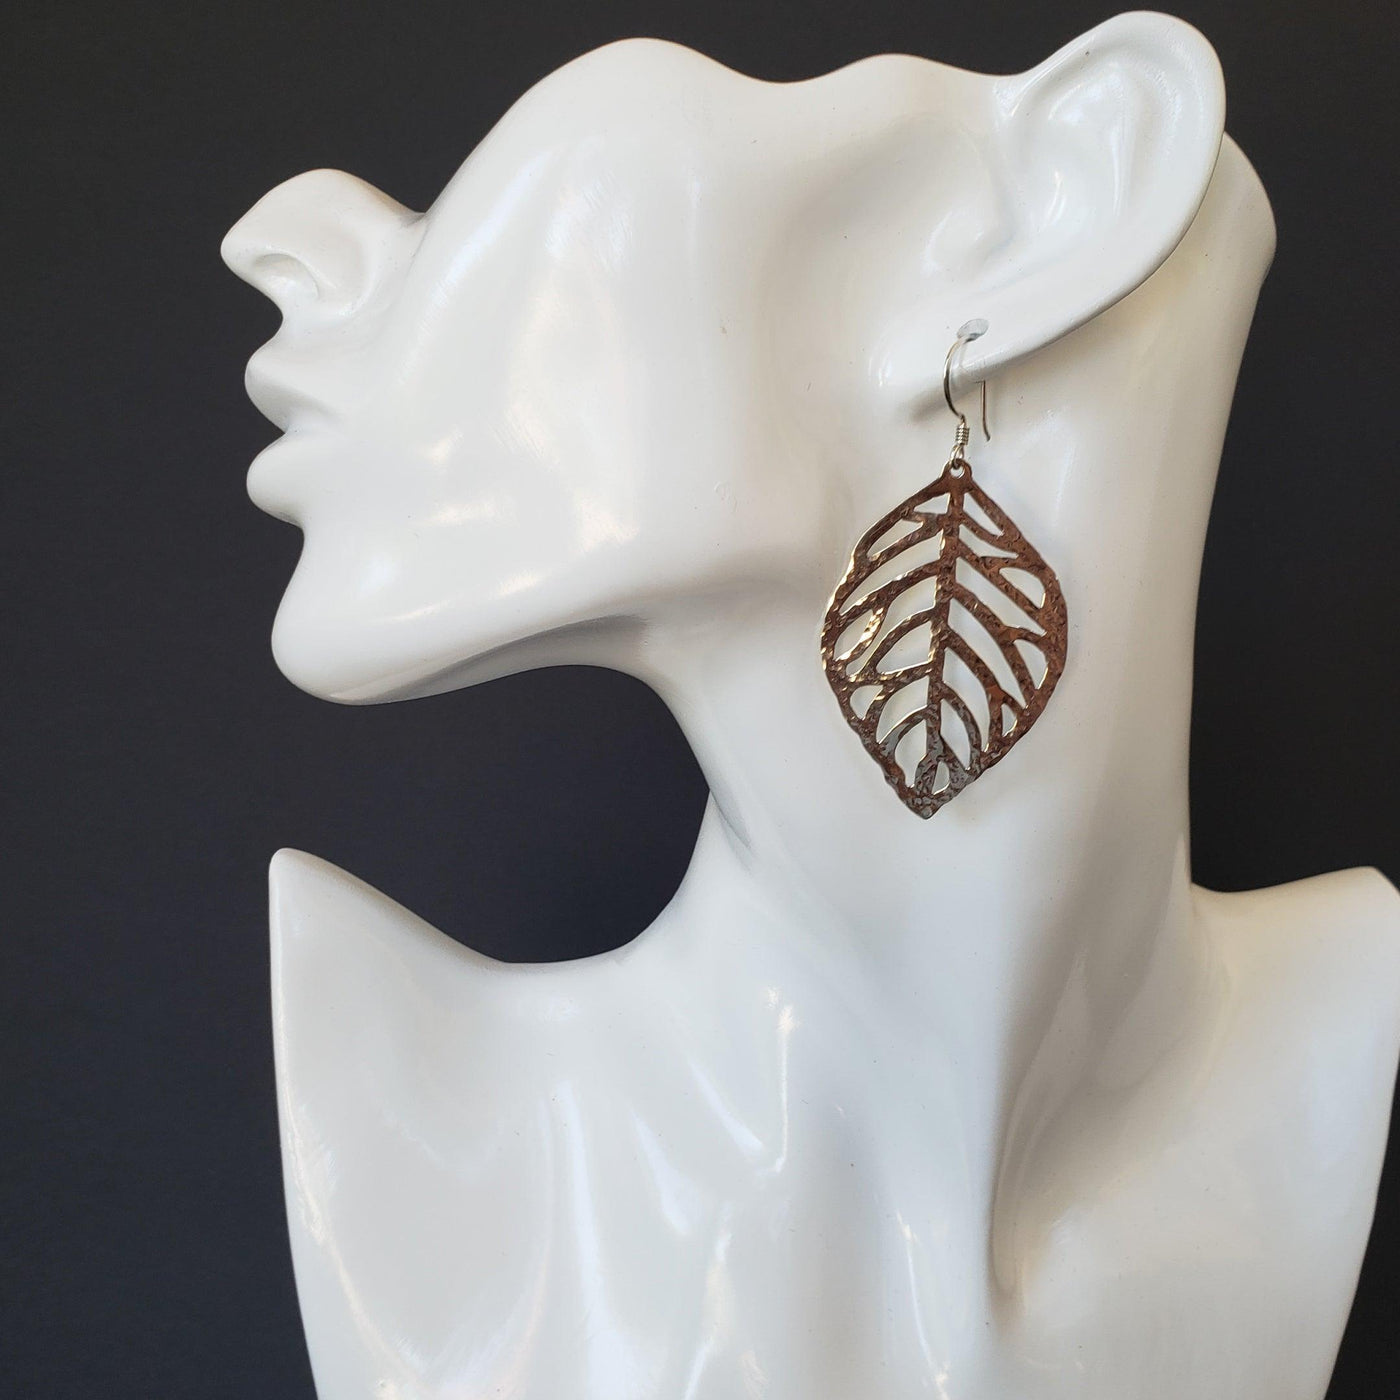 Silver hammered leaf earrings